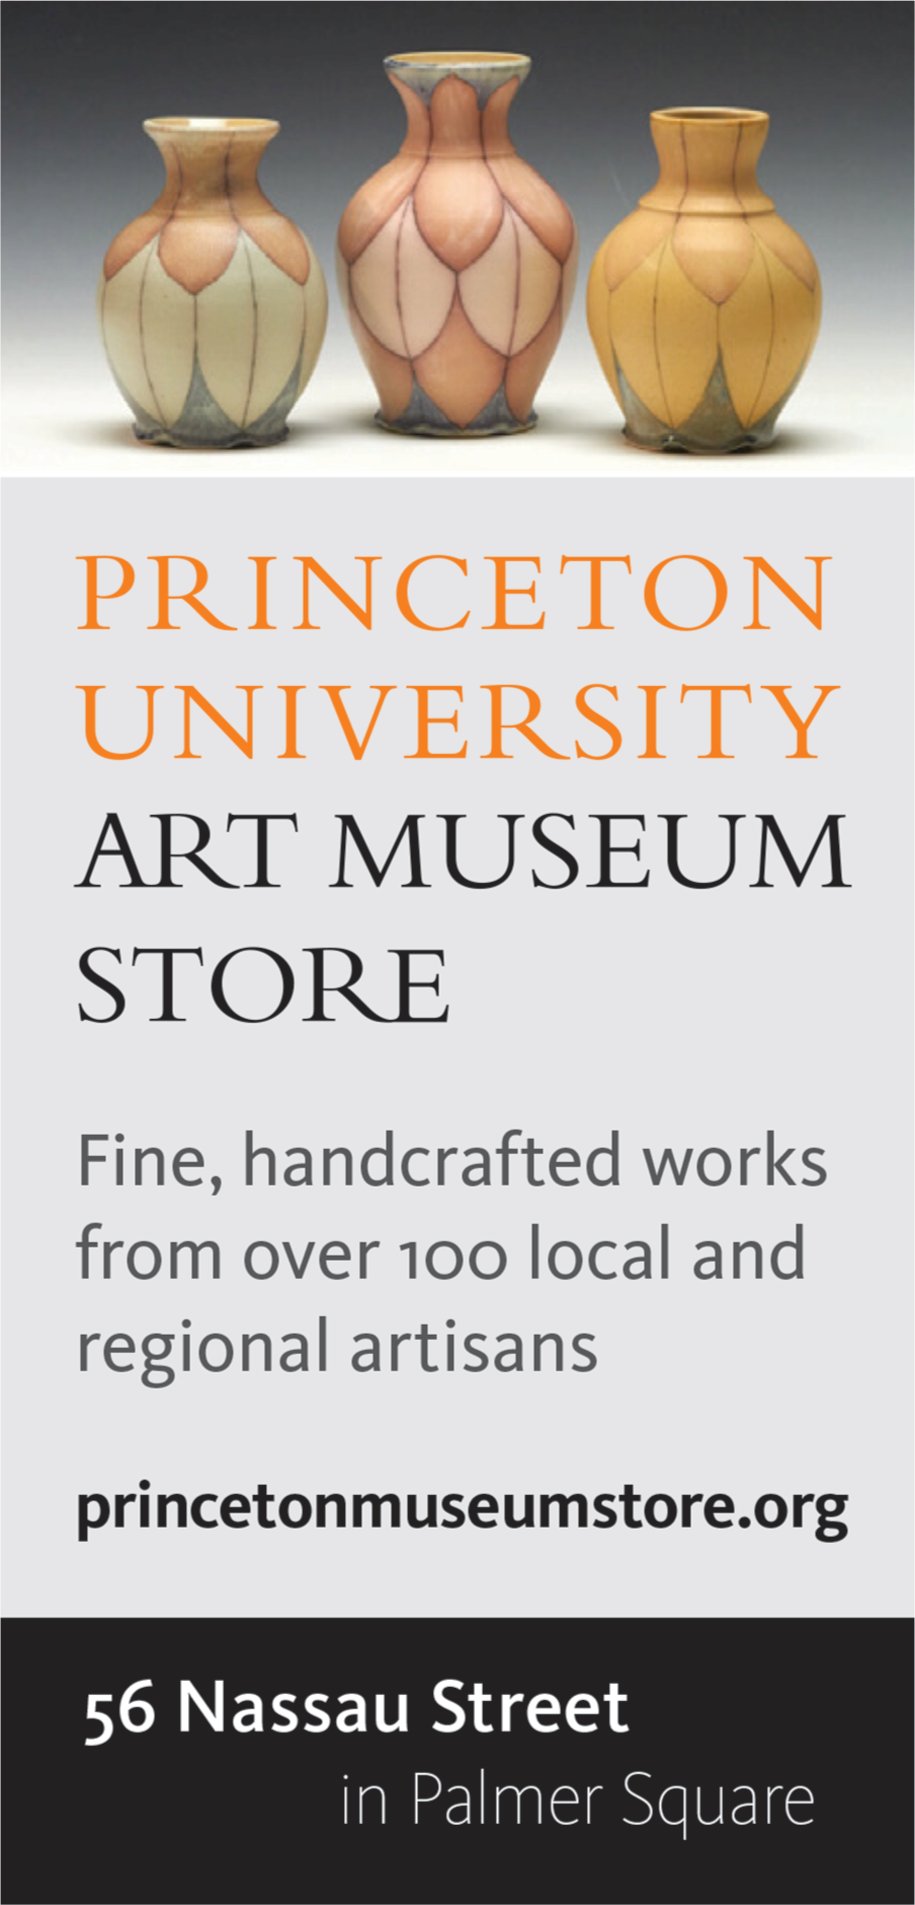 Princeton University Art Museum Store Print Ad